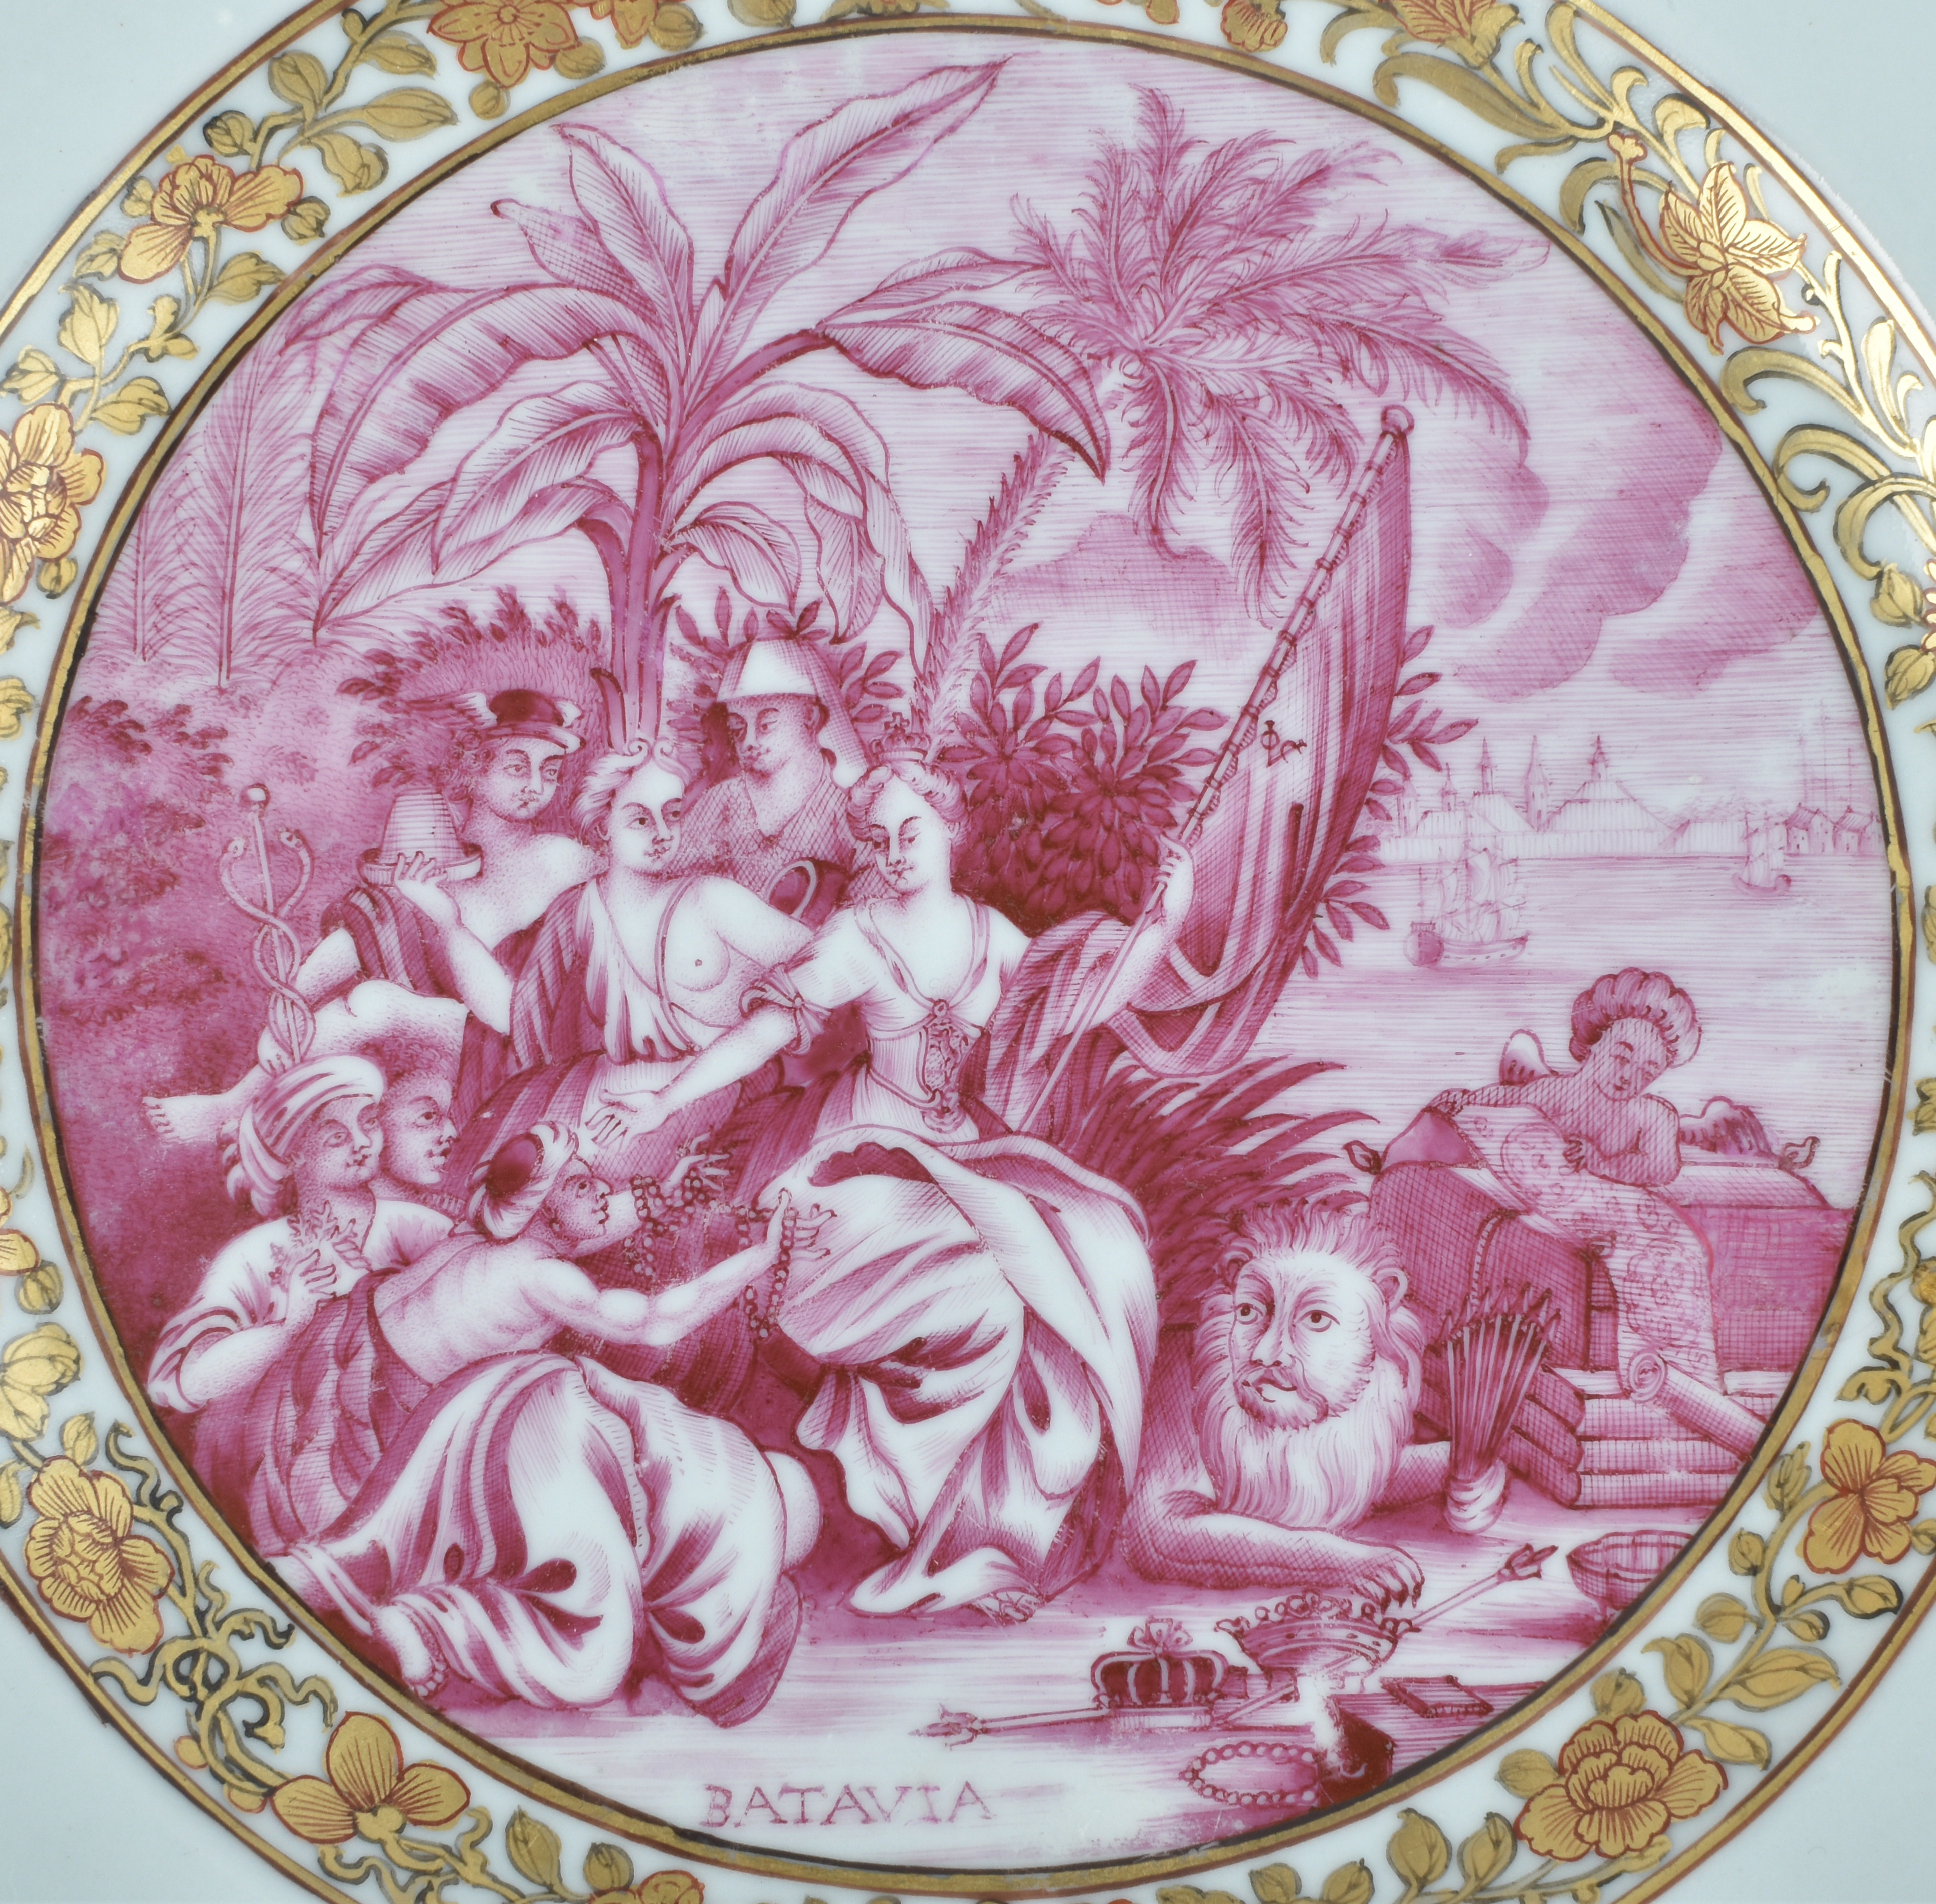 Porcelaine Qianlong (1735-1795), ca. 1740/1750, Chine